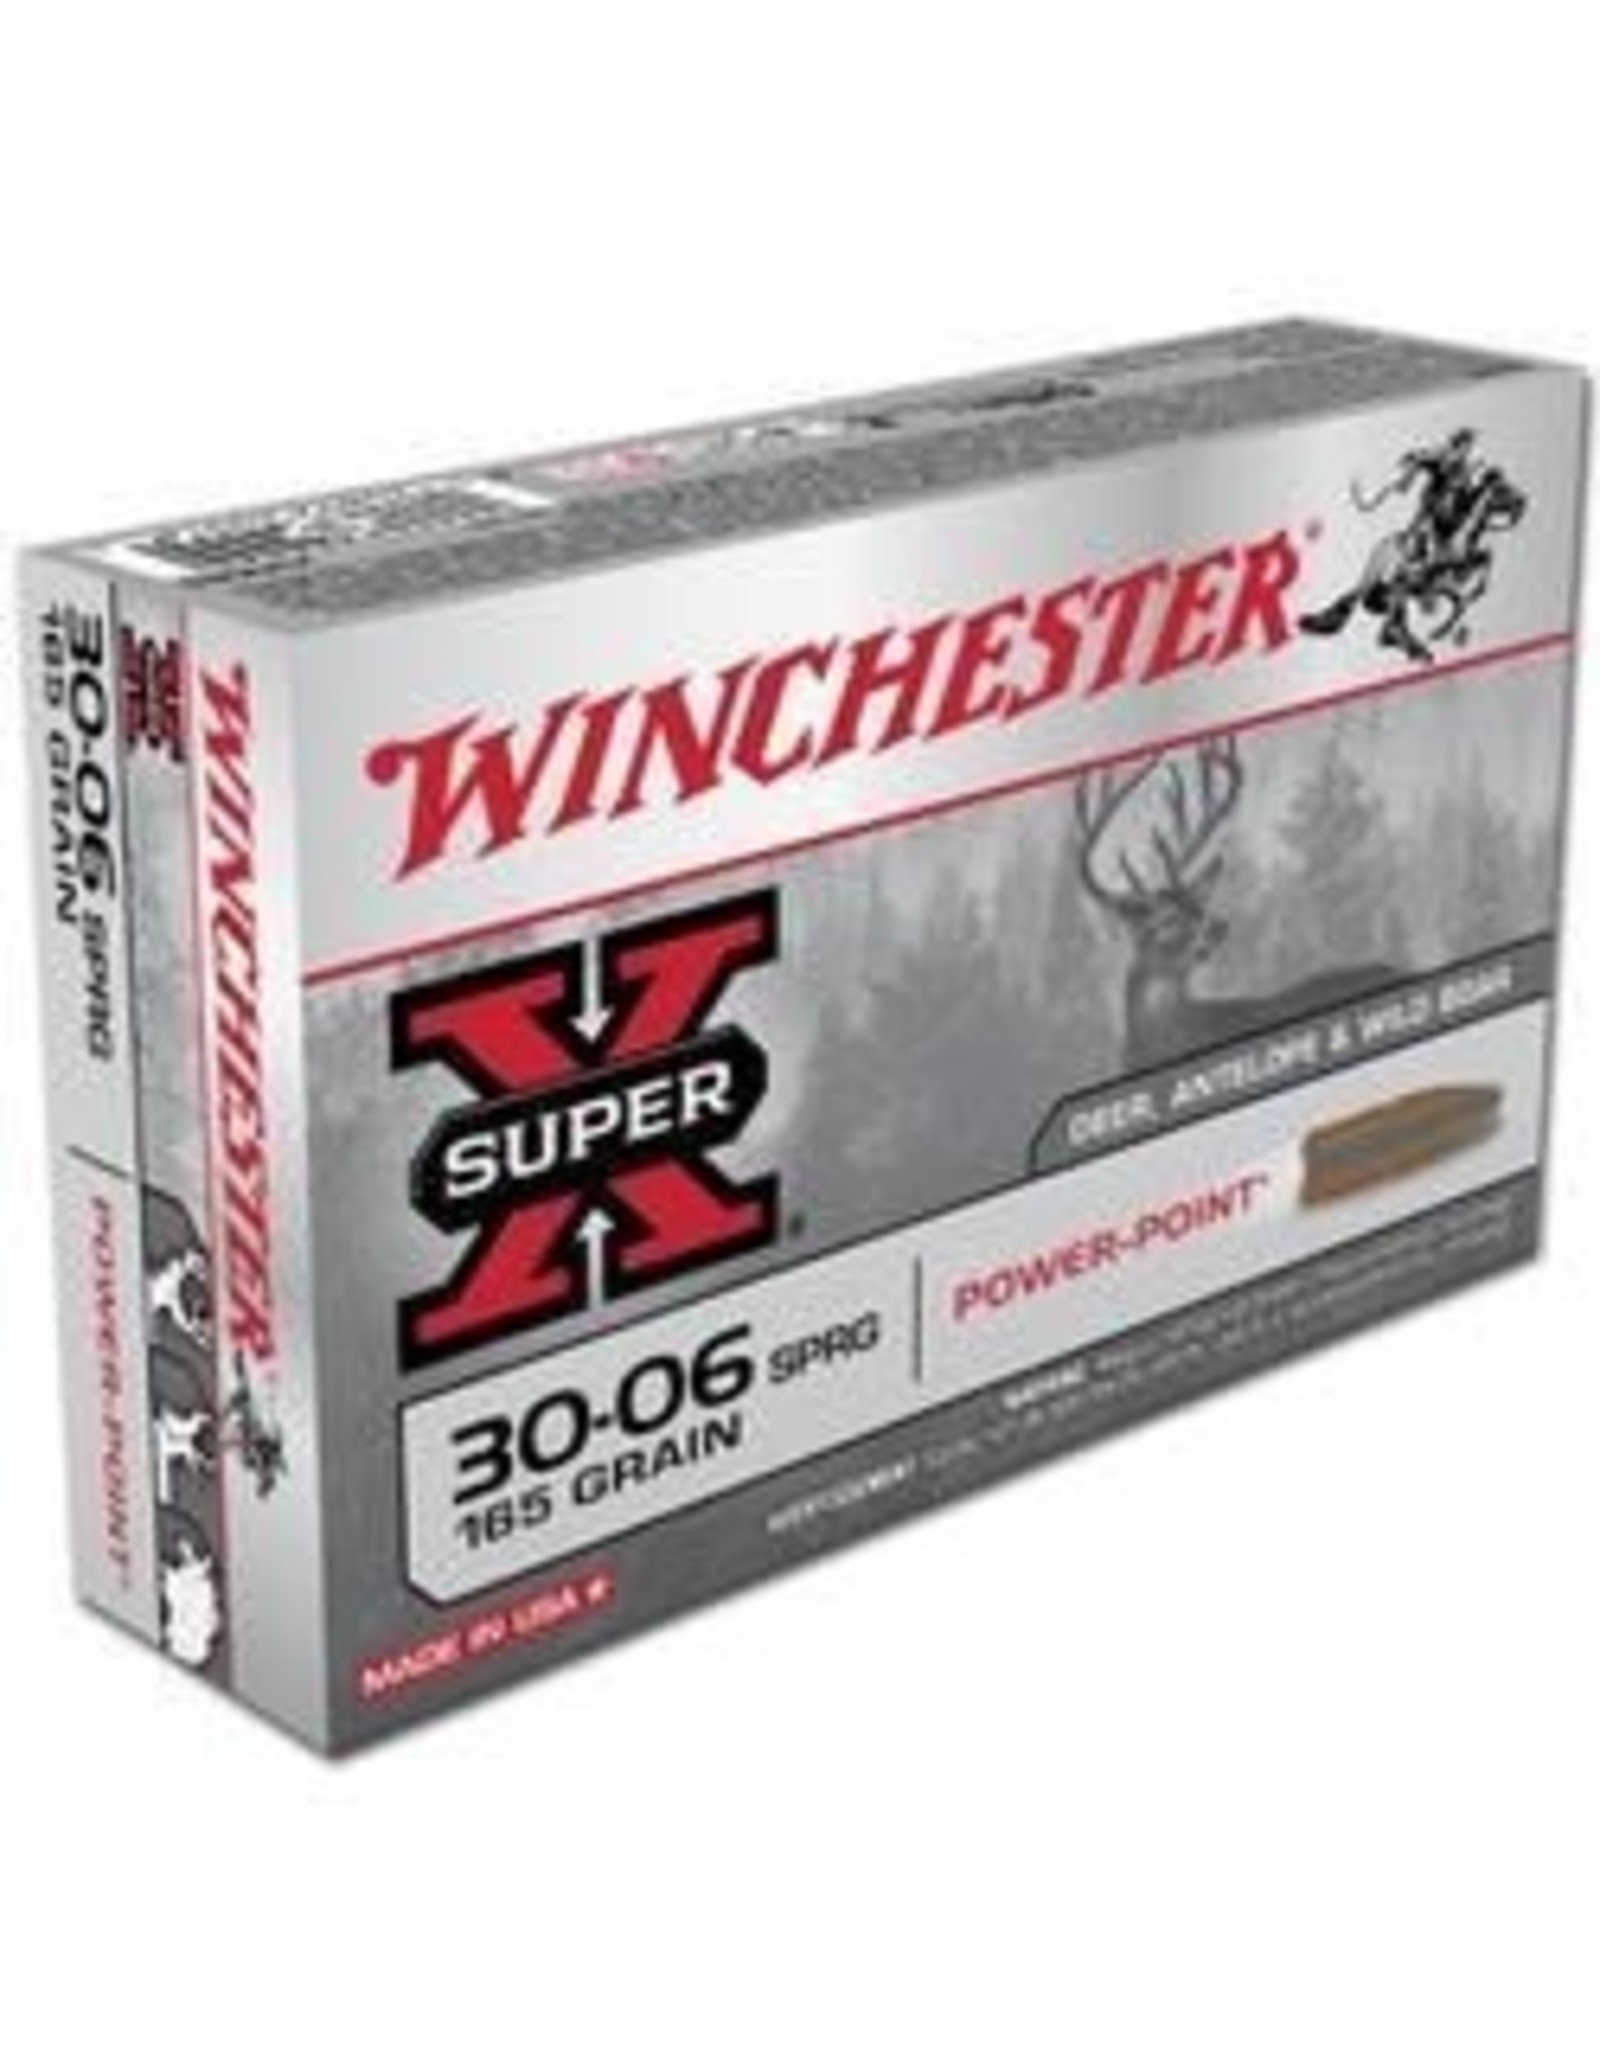 Winchester Winchester Super X 30-06 sprg 165 gr Power-point